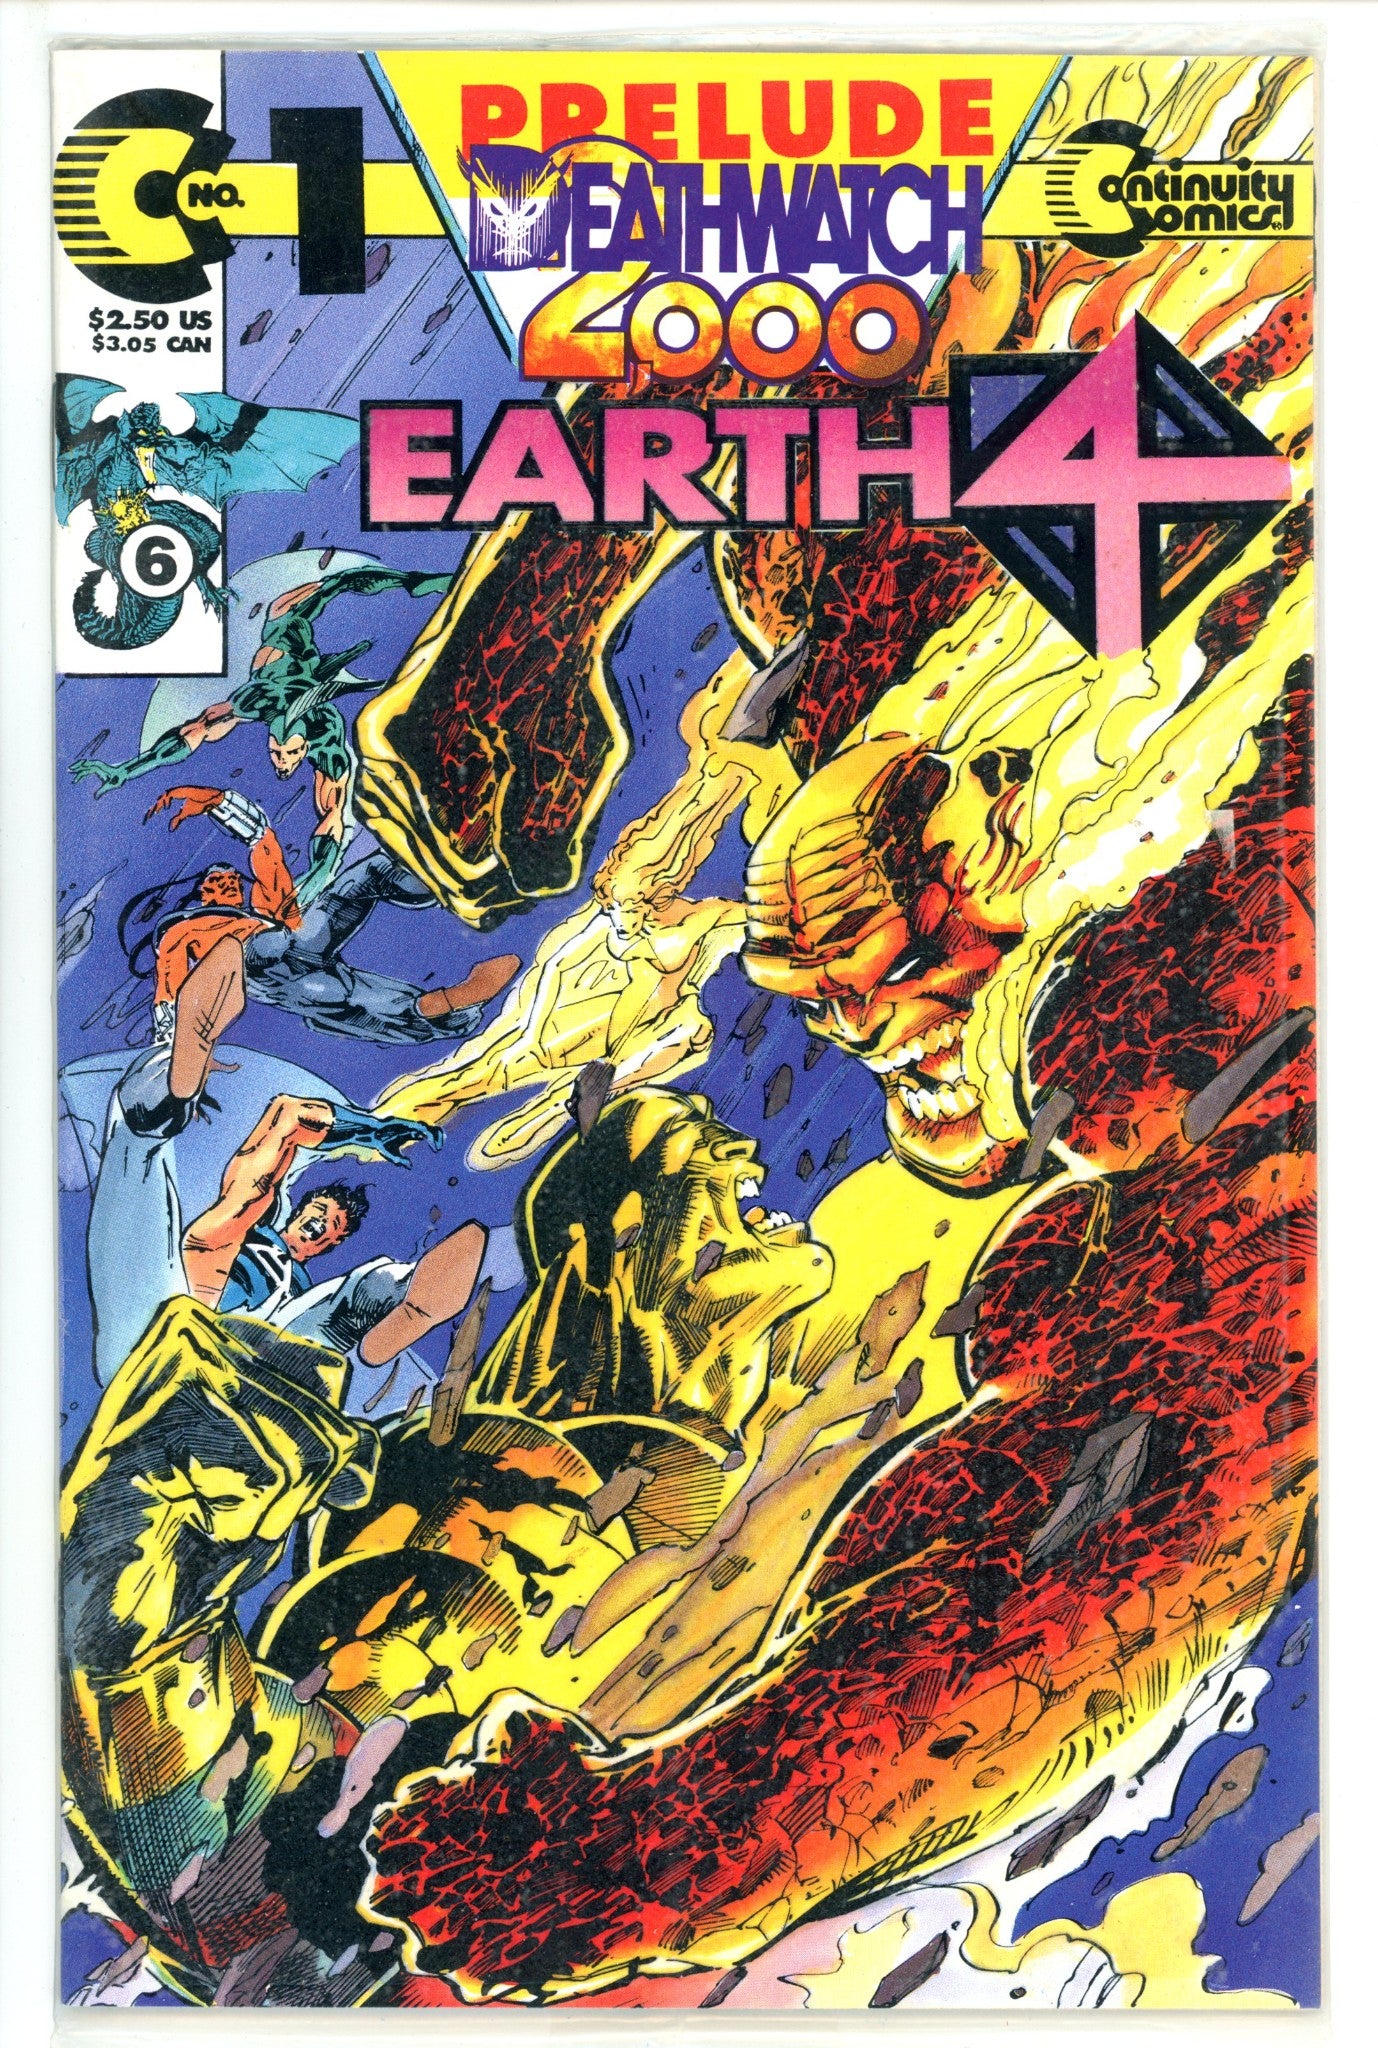 Earth 4 Vol 1 1 Sealed (1993)